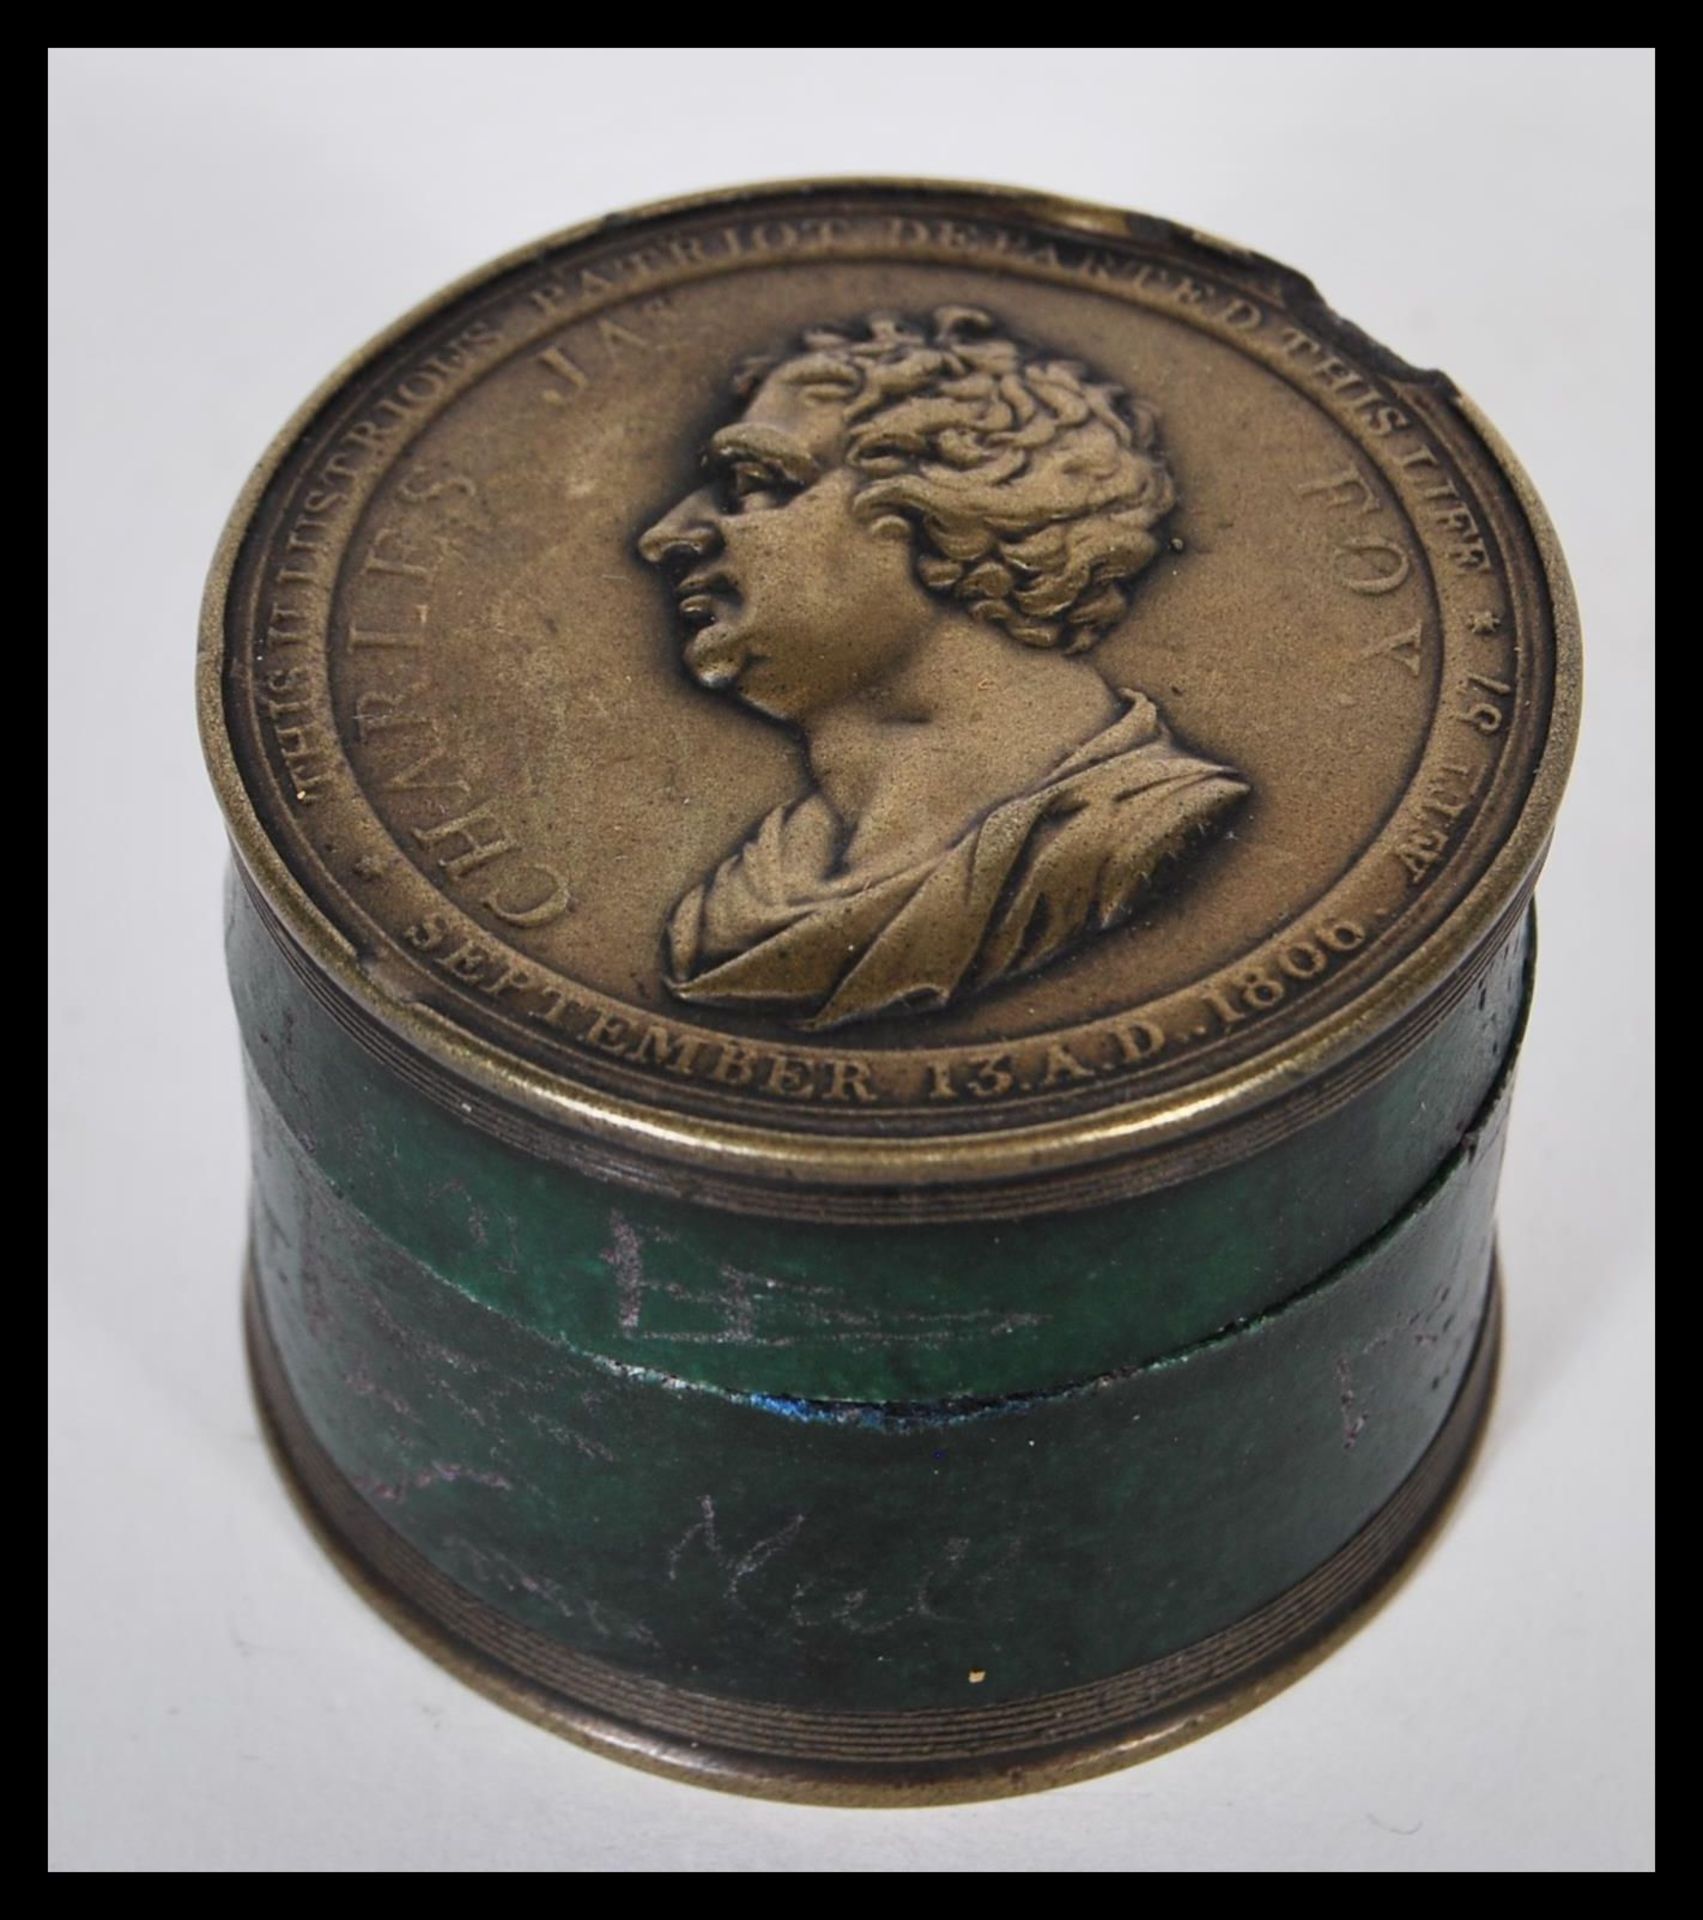 Politics - a 19th Century circular ebony and medallic snuff box, commemorating the life of Charles